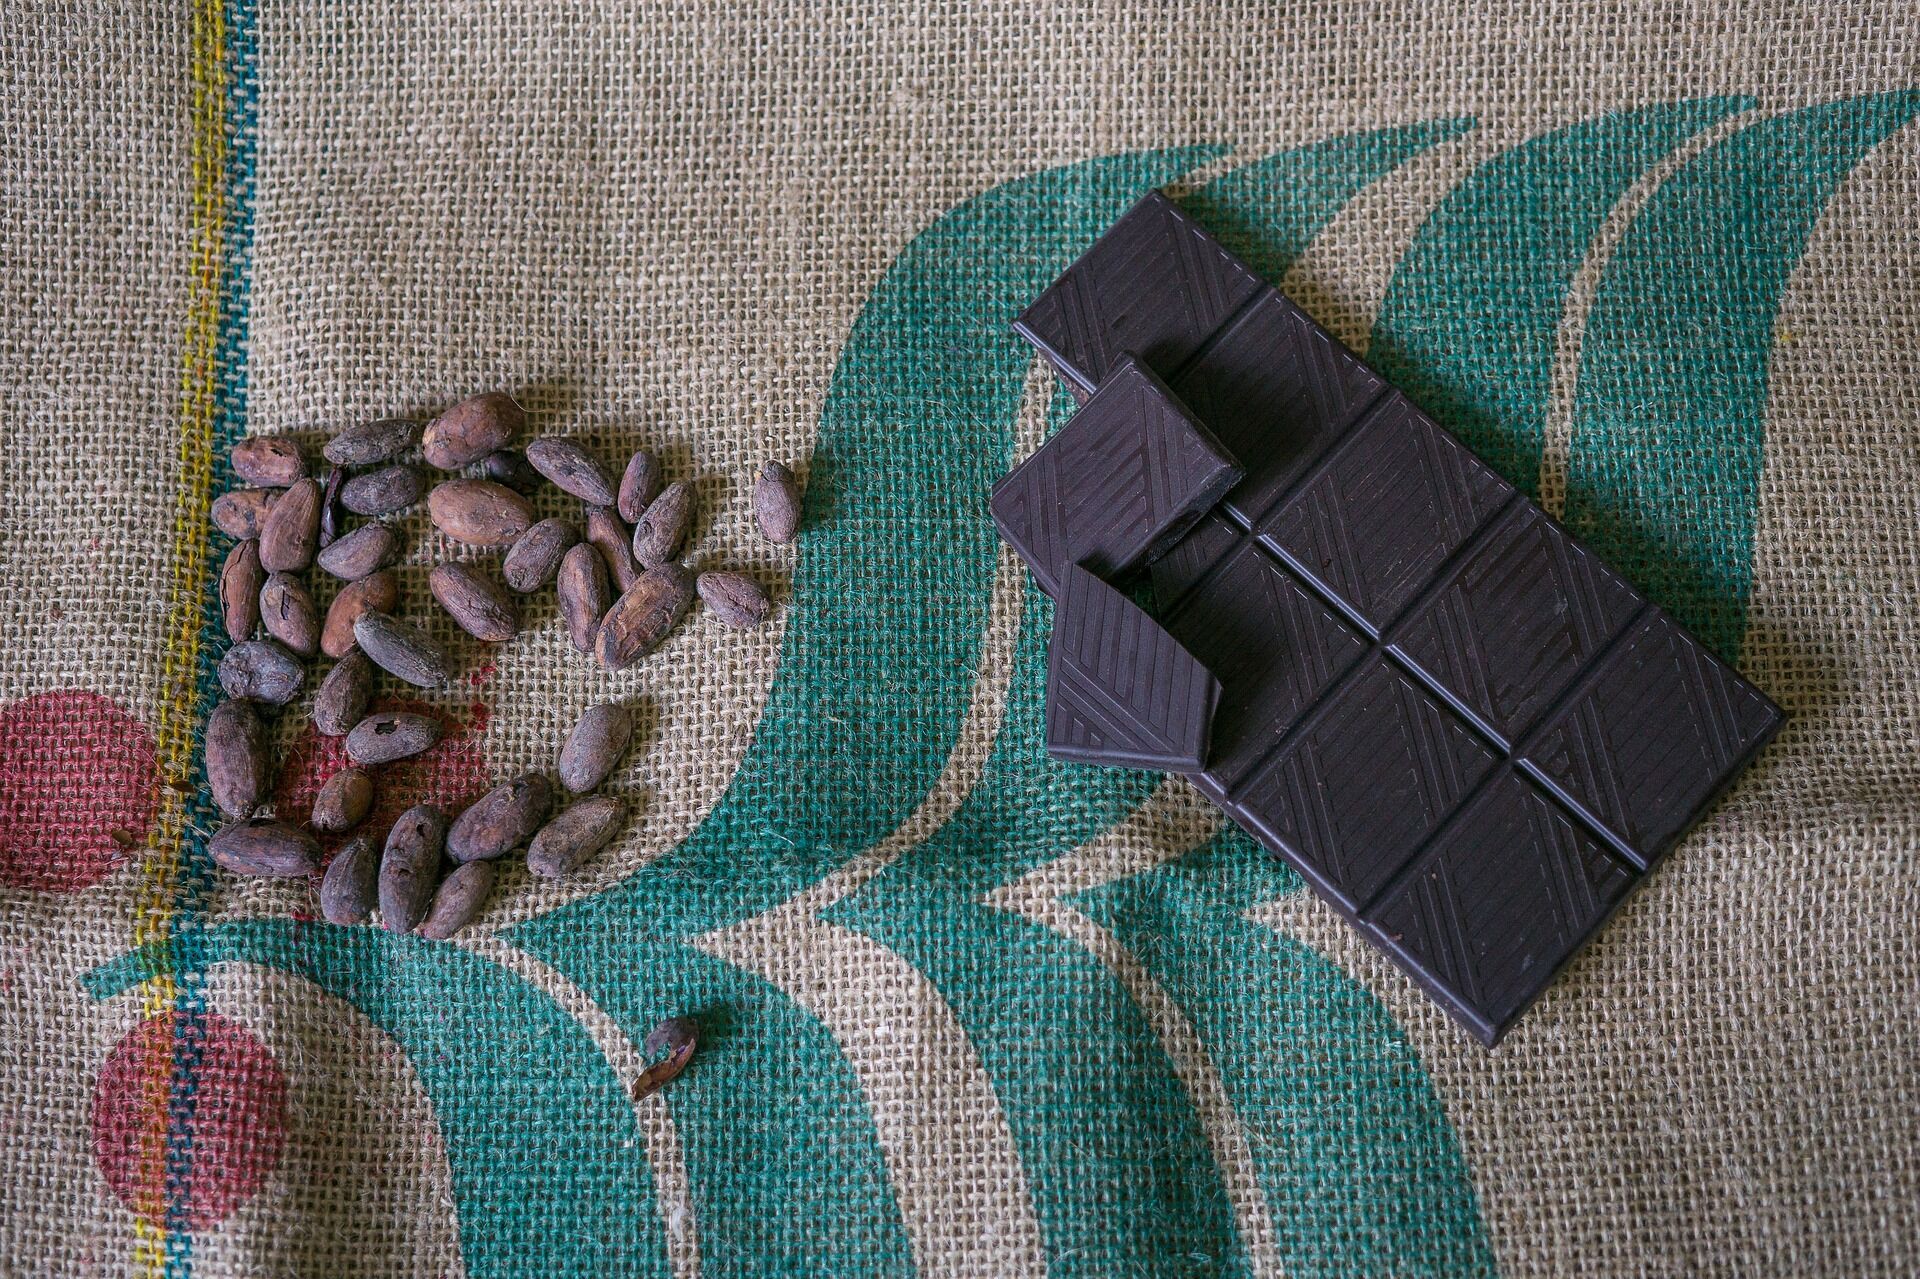 Какао содержит мощный антиоксидант флаванол